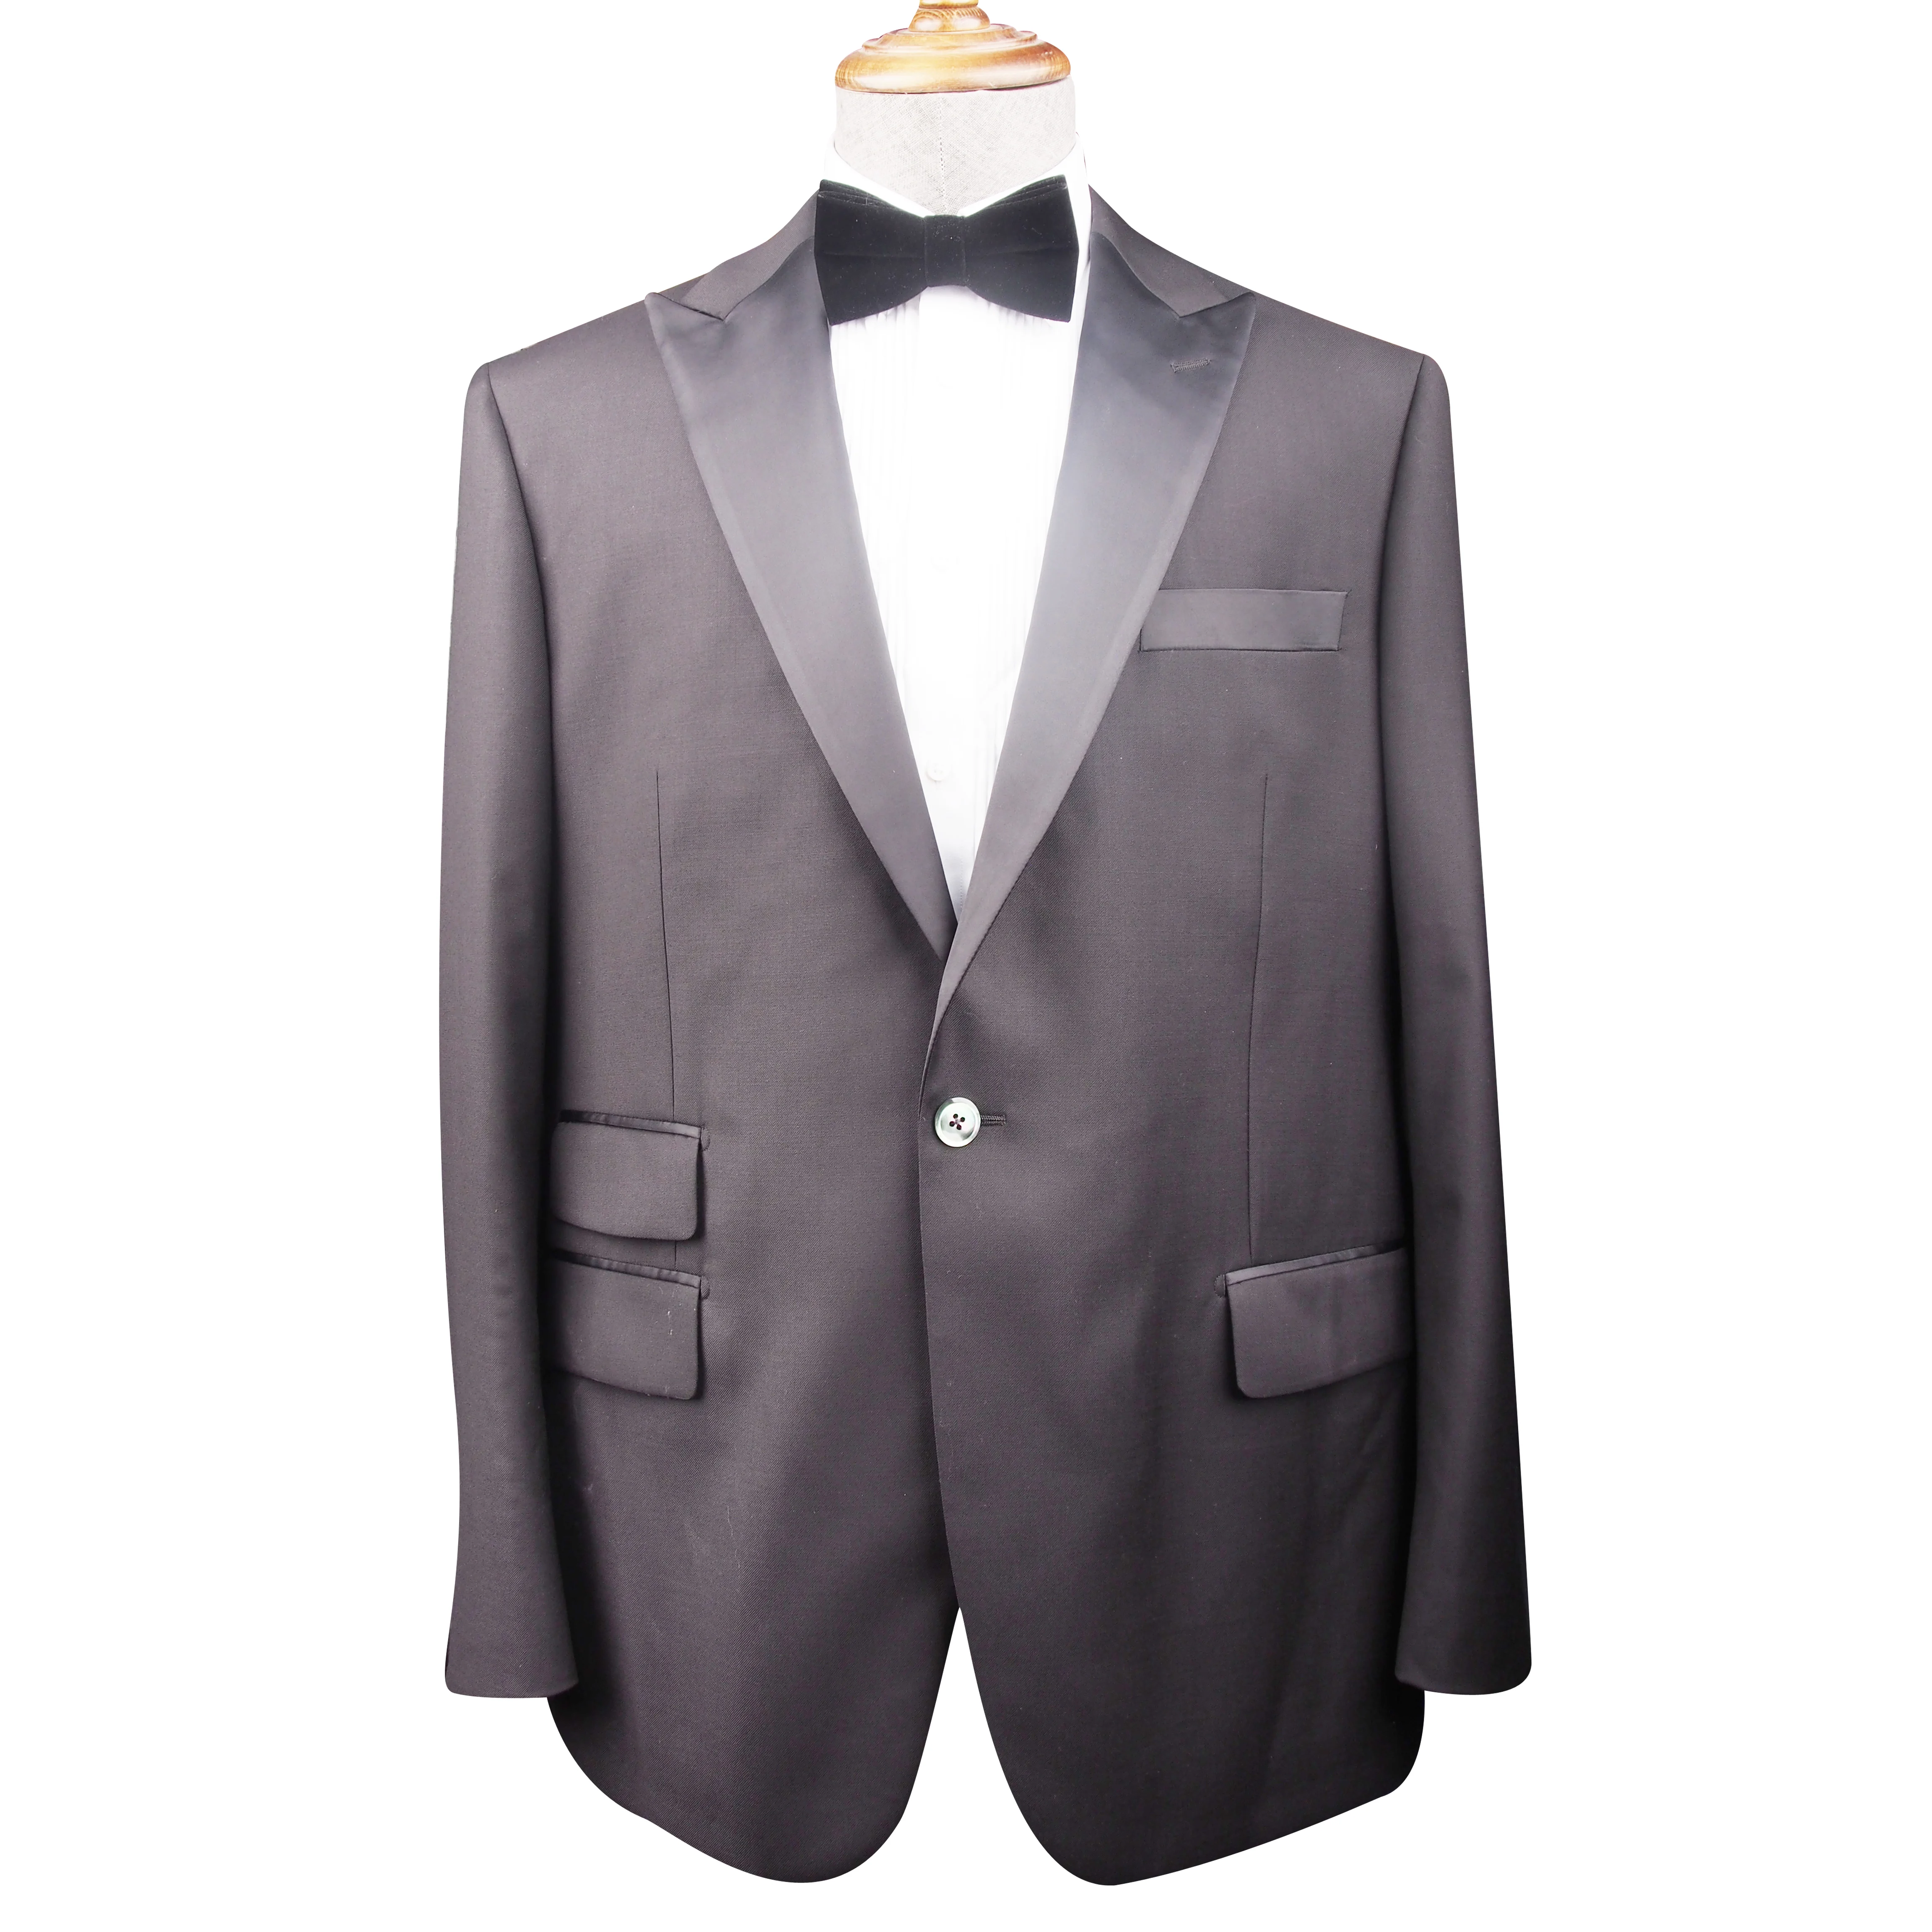 made in China wholesale 2 piezas 100% Wool  Tuxedo Suit modern men's suit